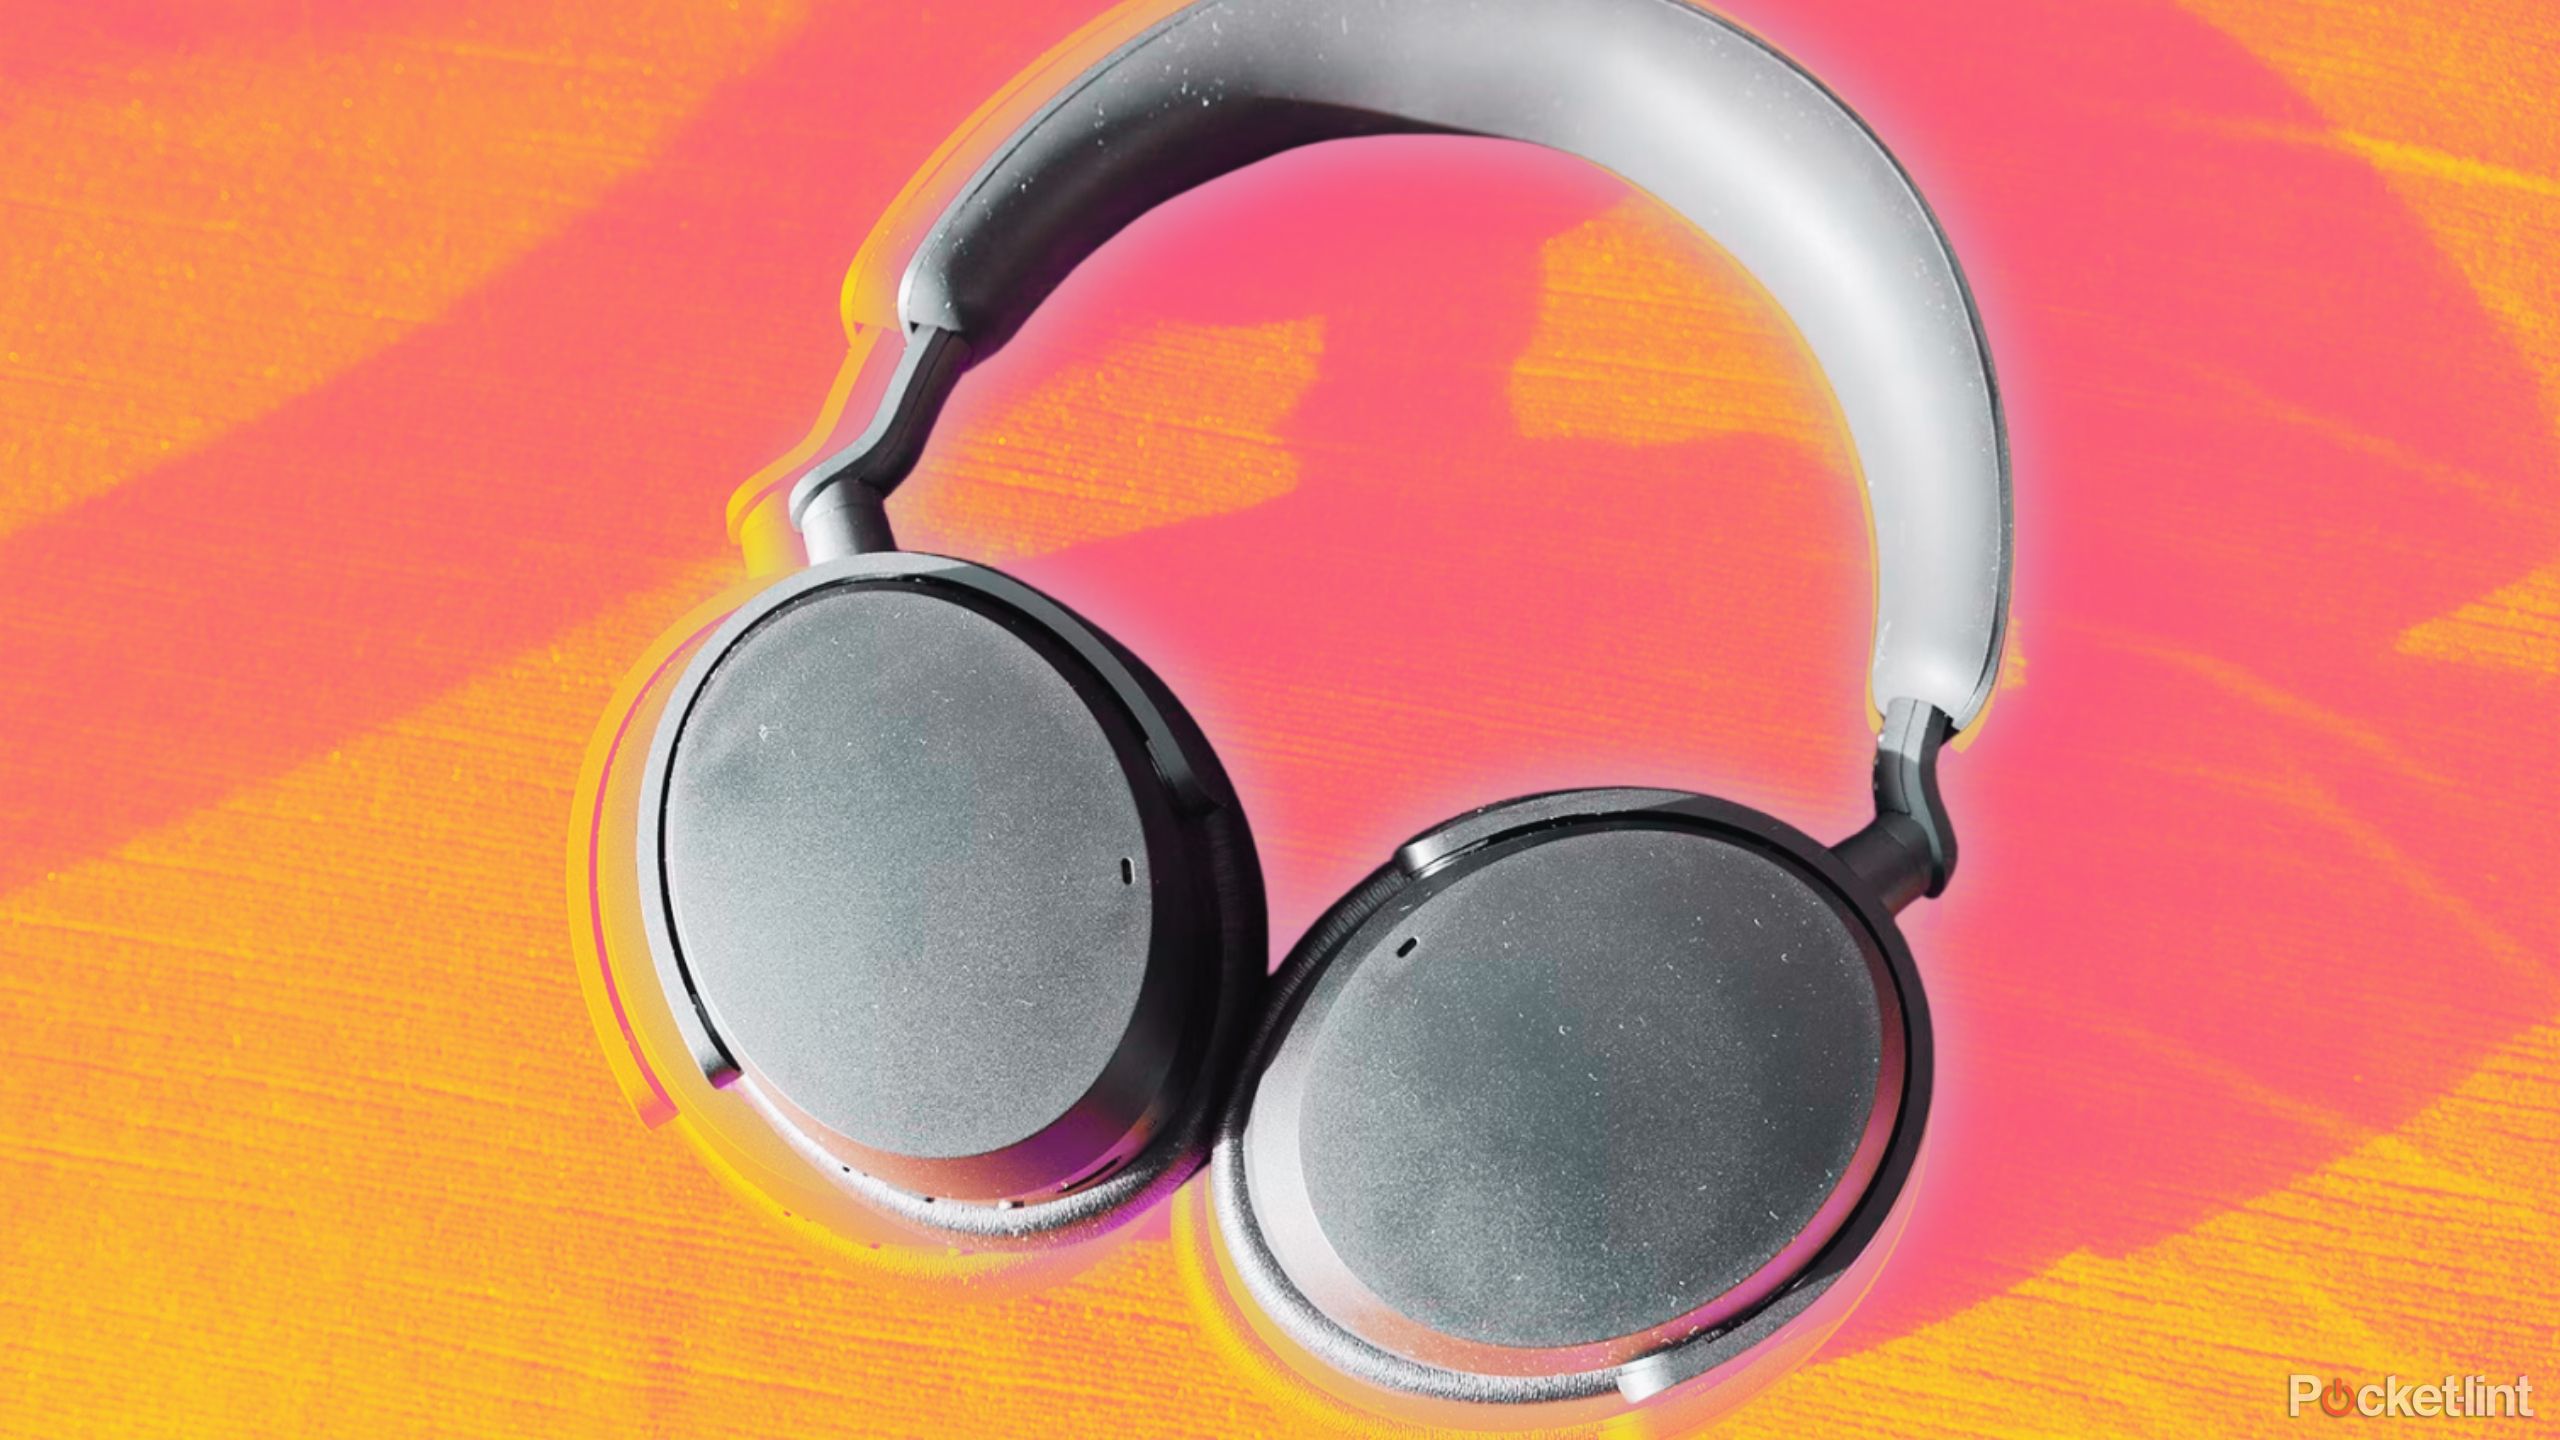 Sennheiser Accentum 3 headphones against an orange and pink background.